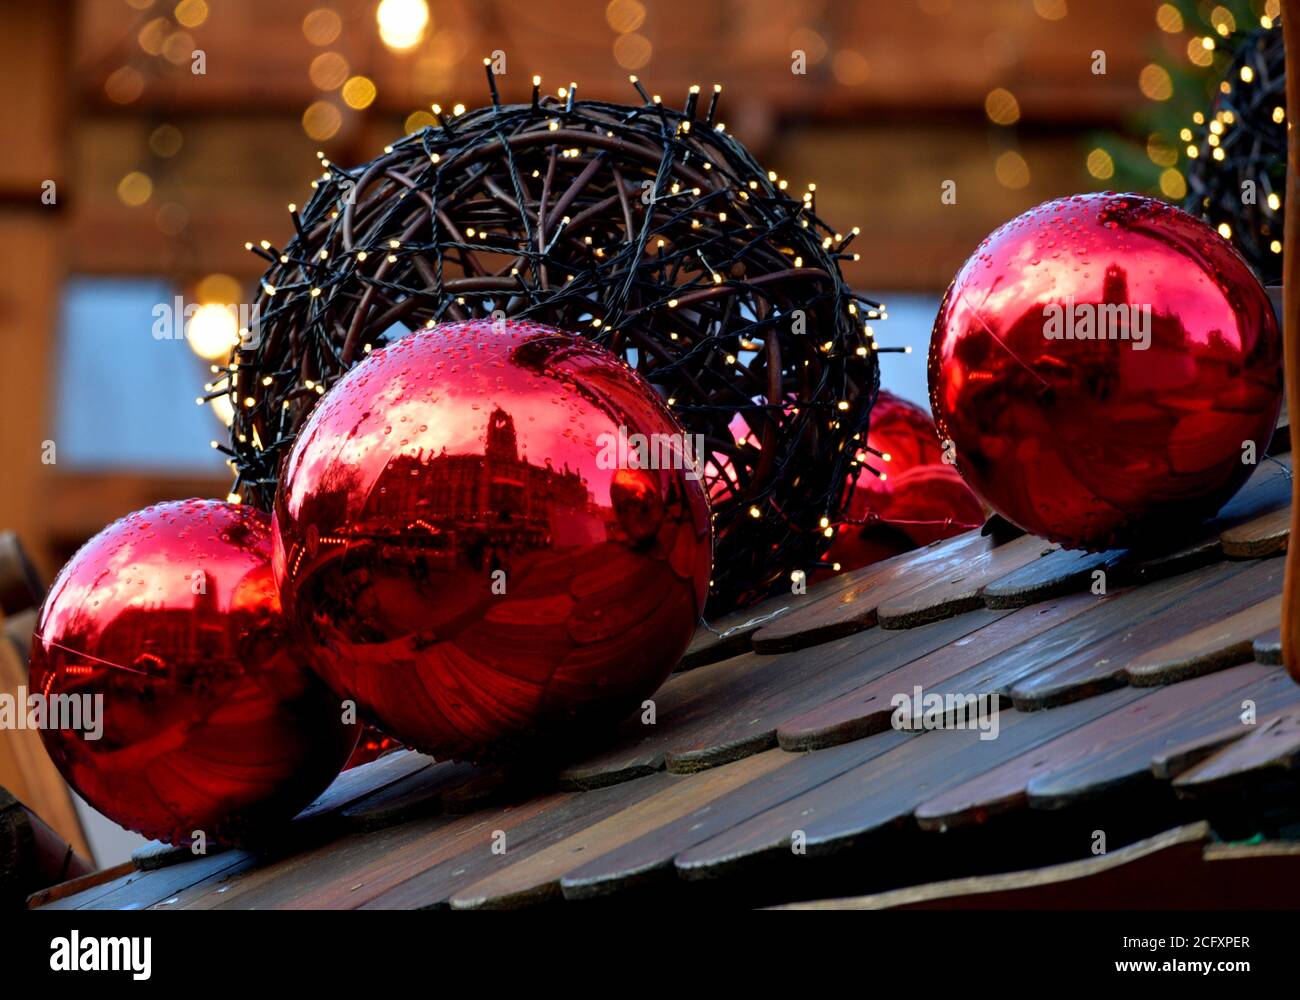 Manchester Christmas Markets Stock Photo